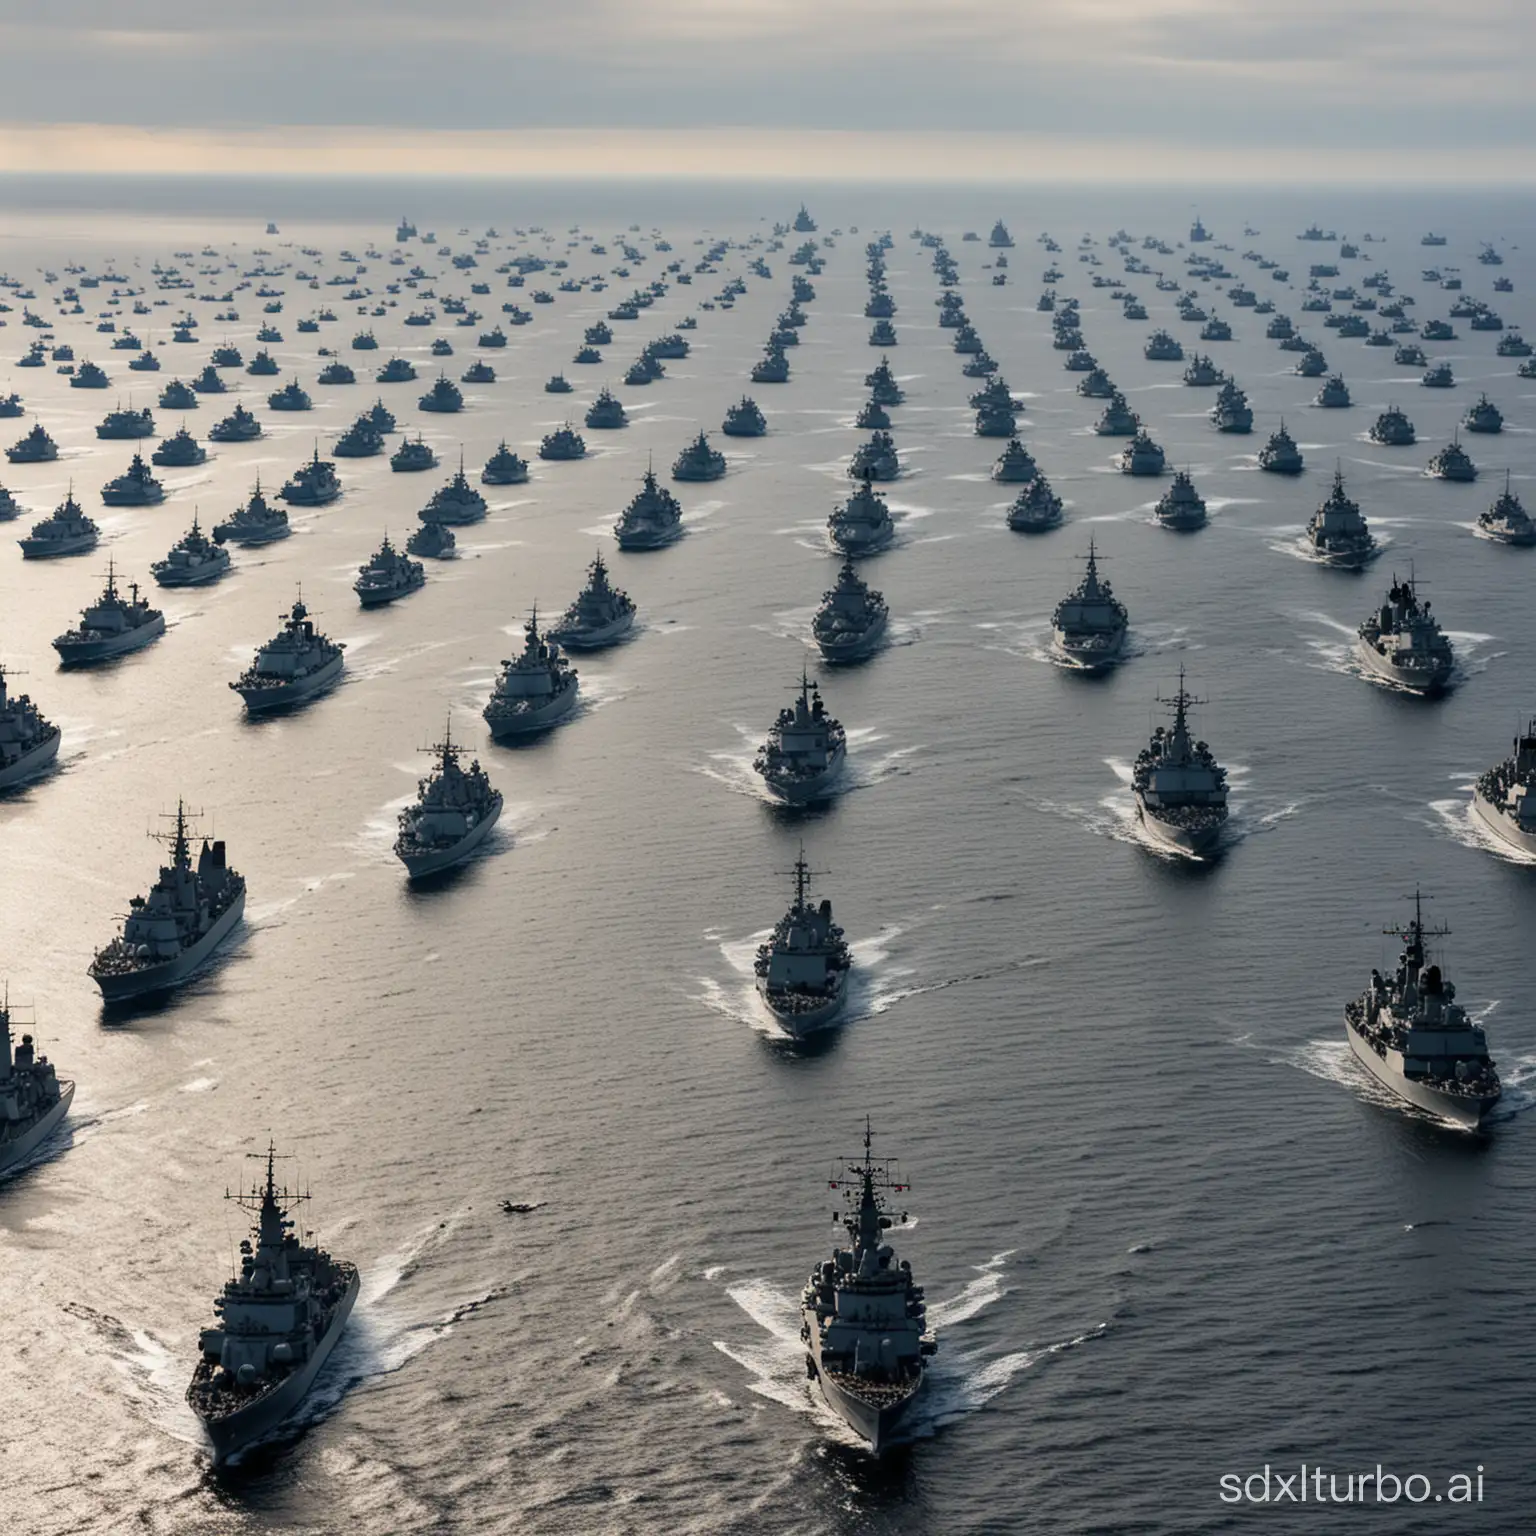 Hundreds of warships